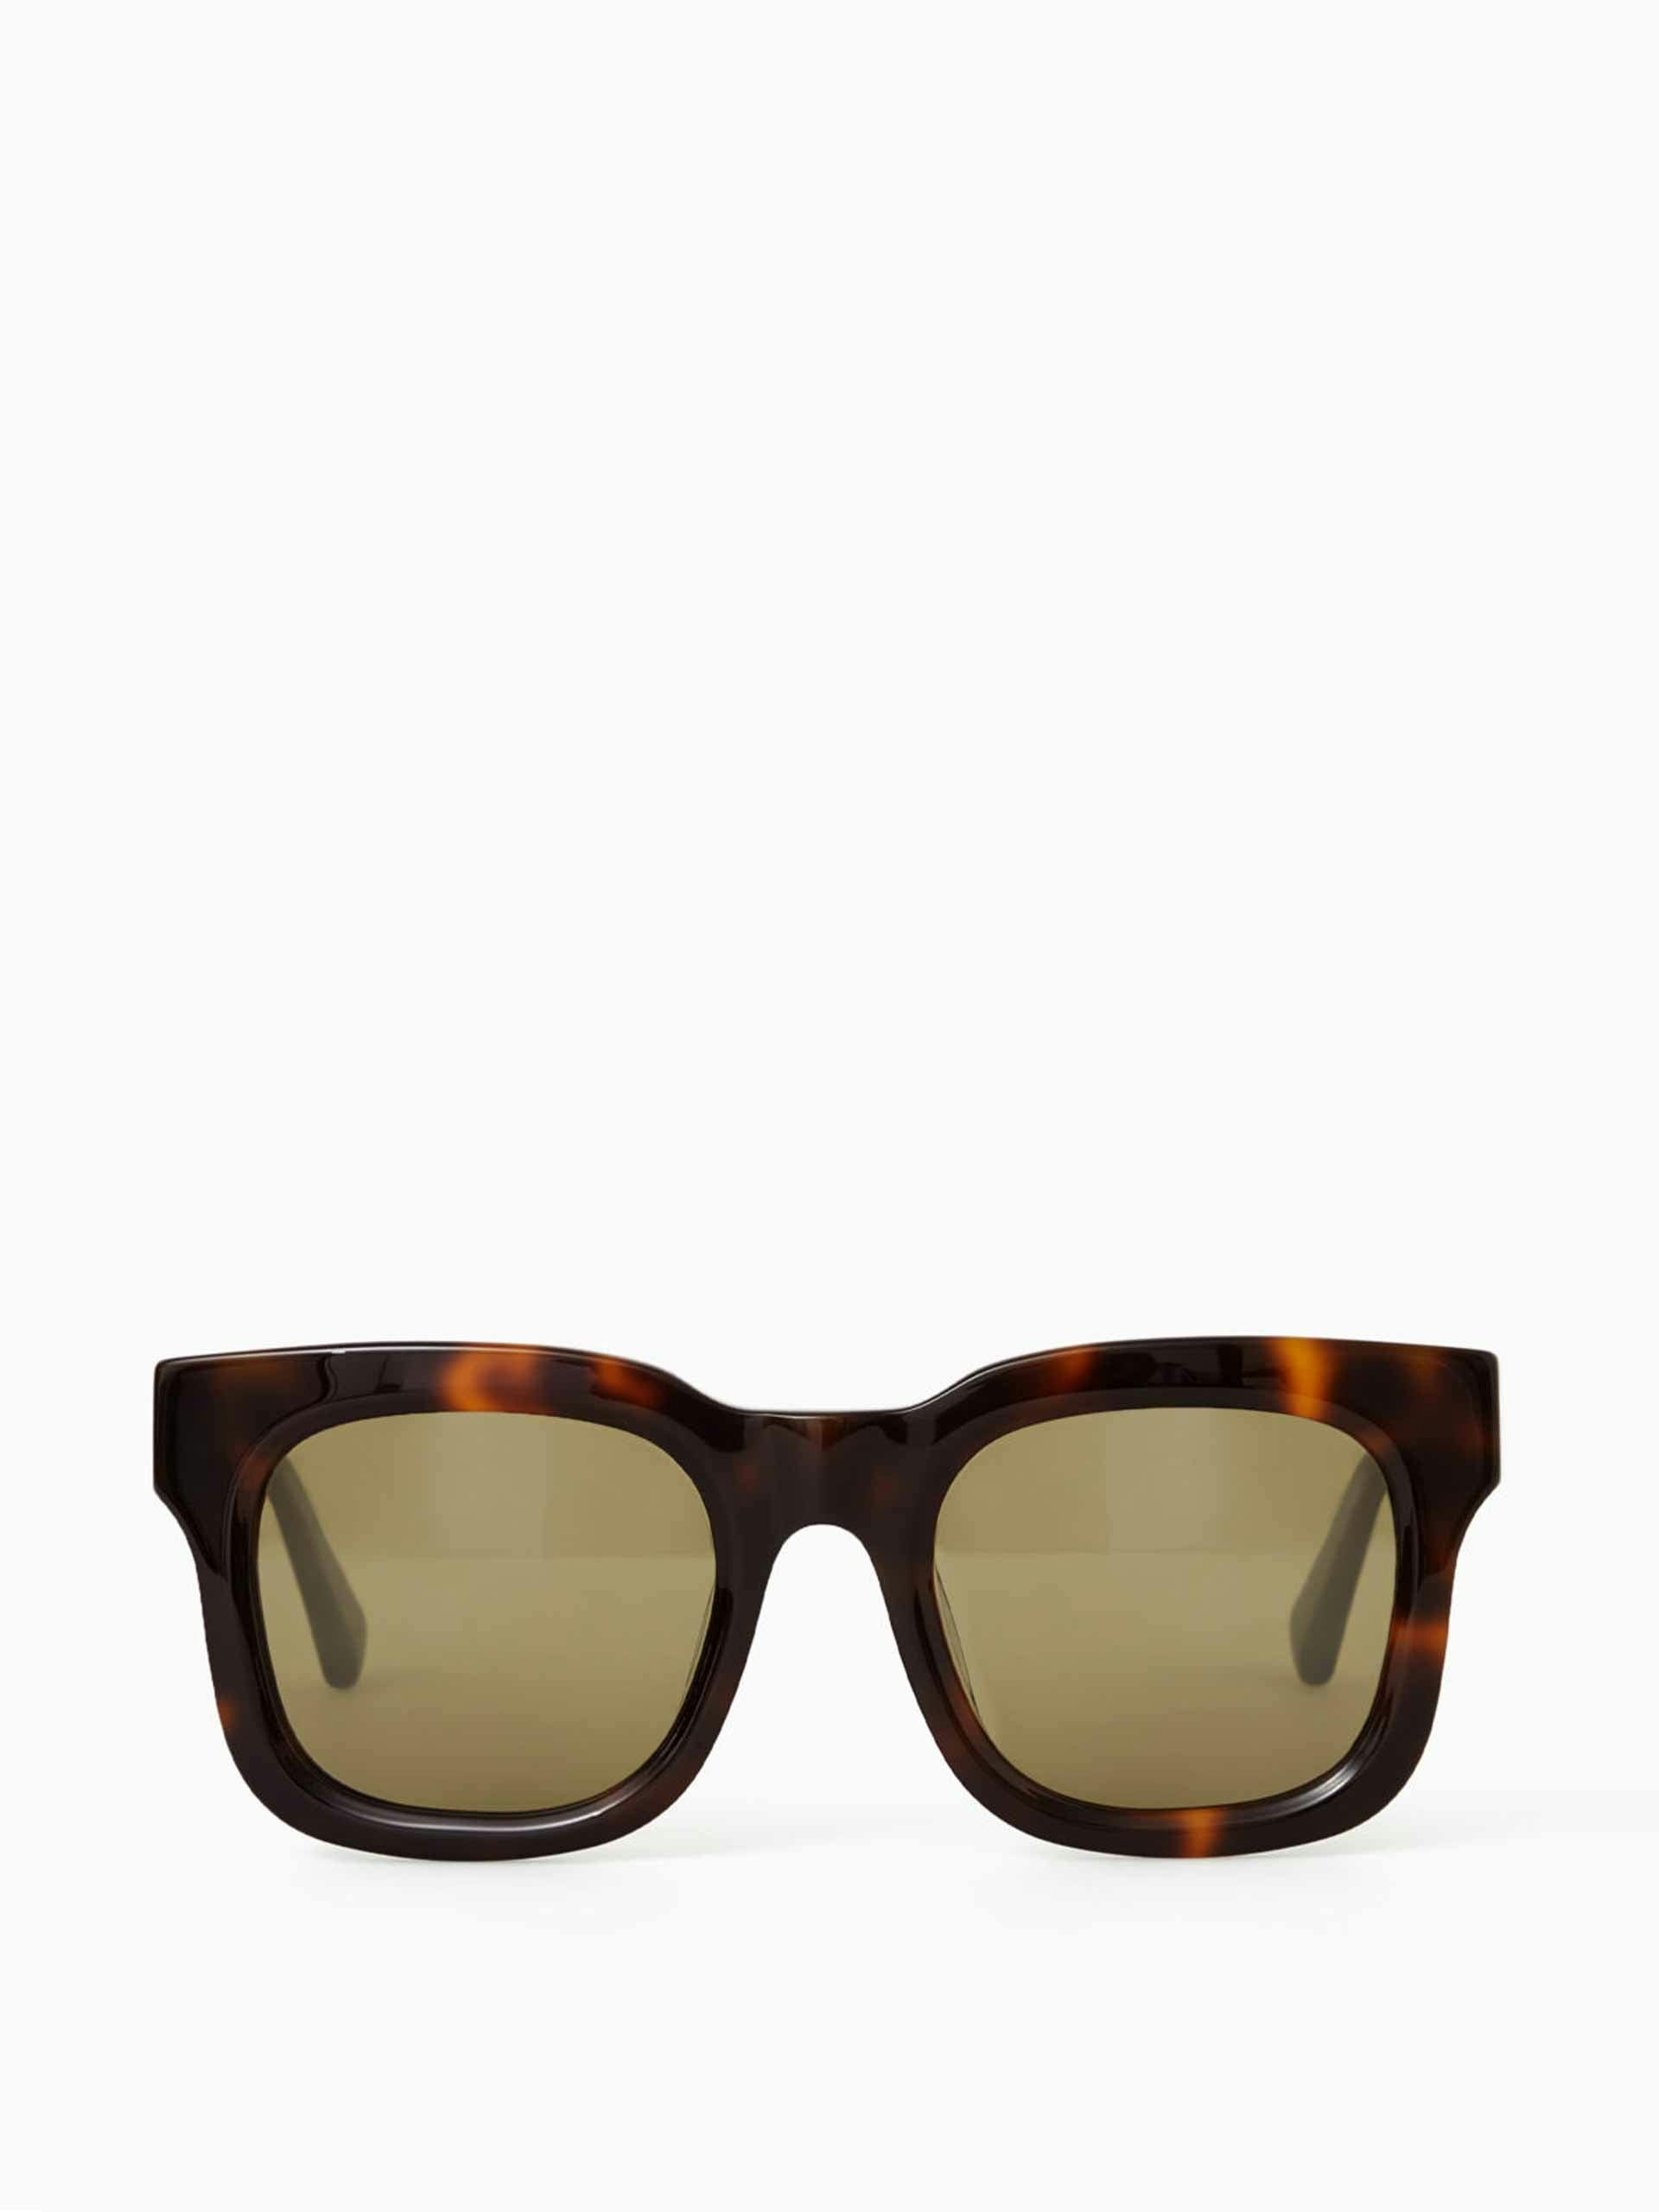 The Square acetate tortoiseshell sunglasses